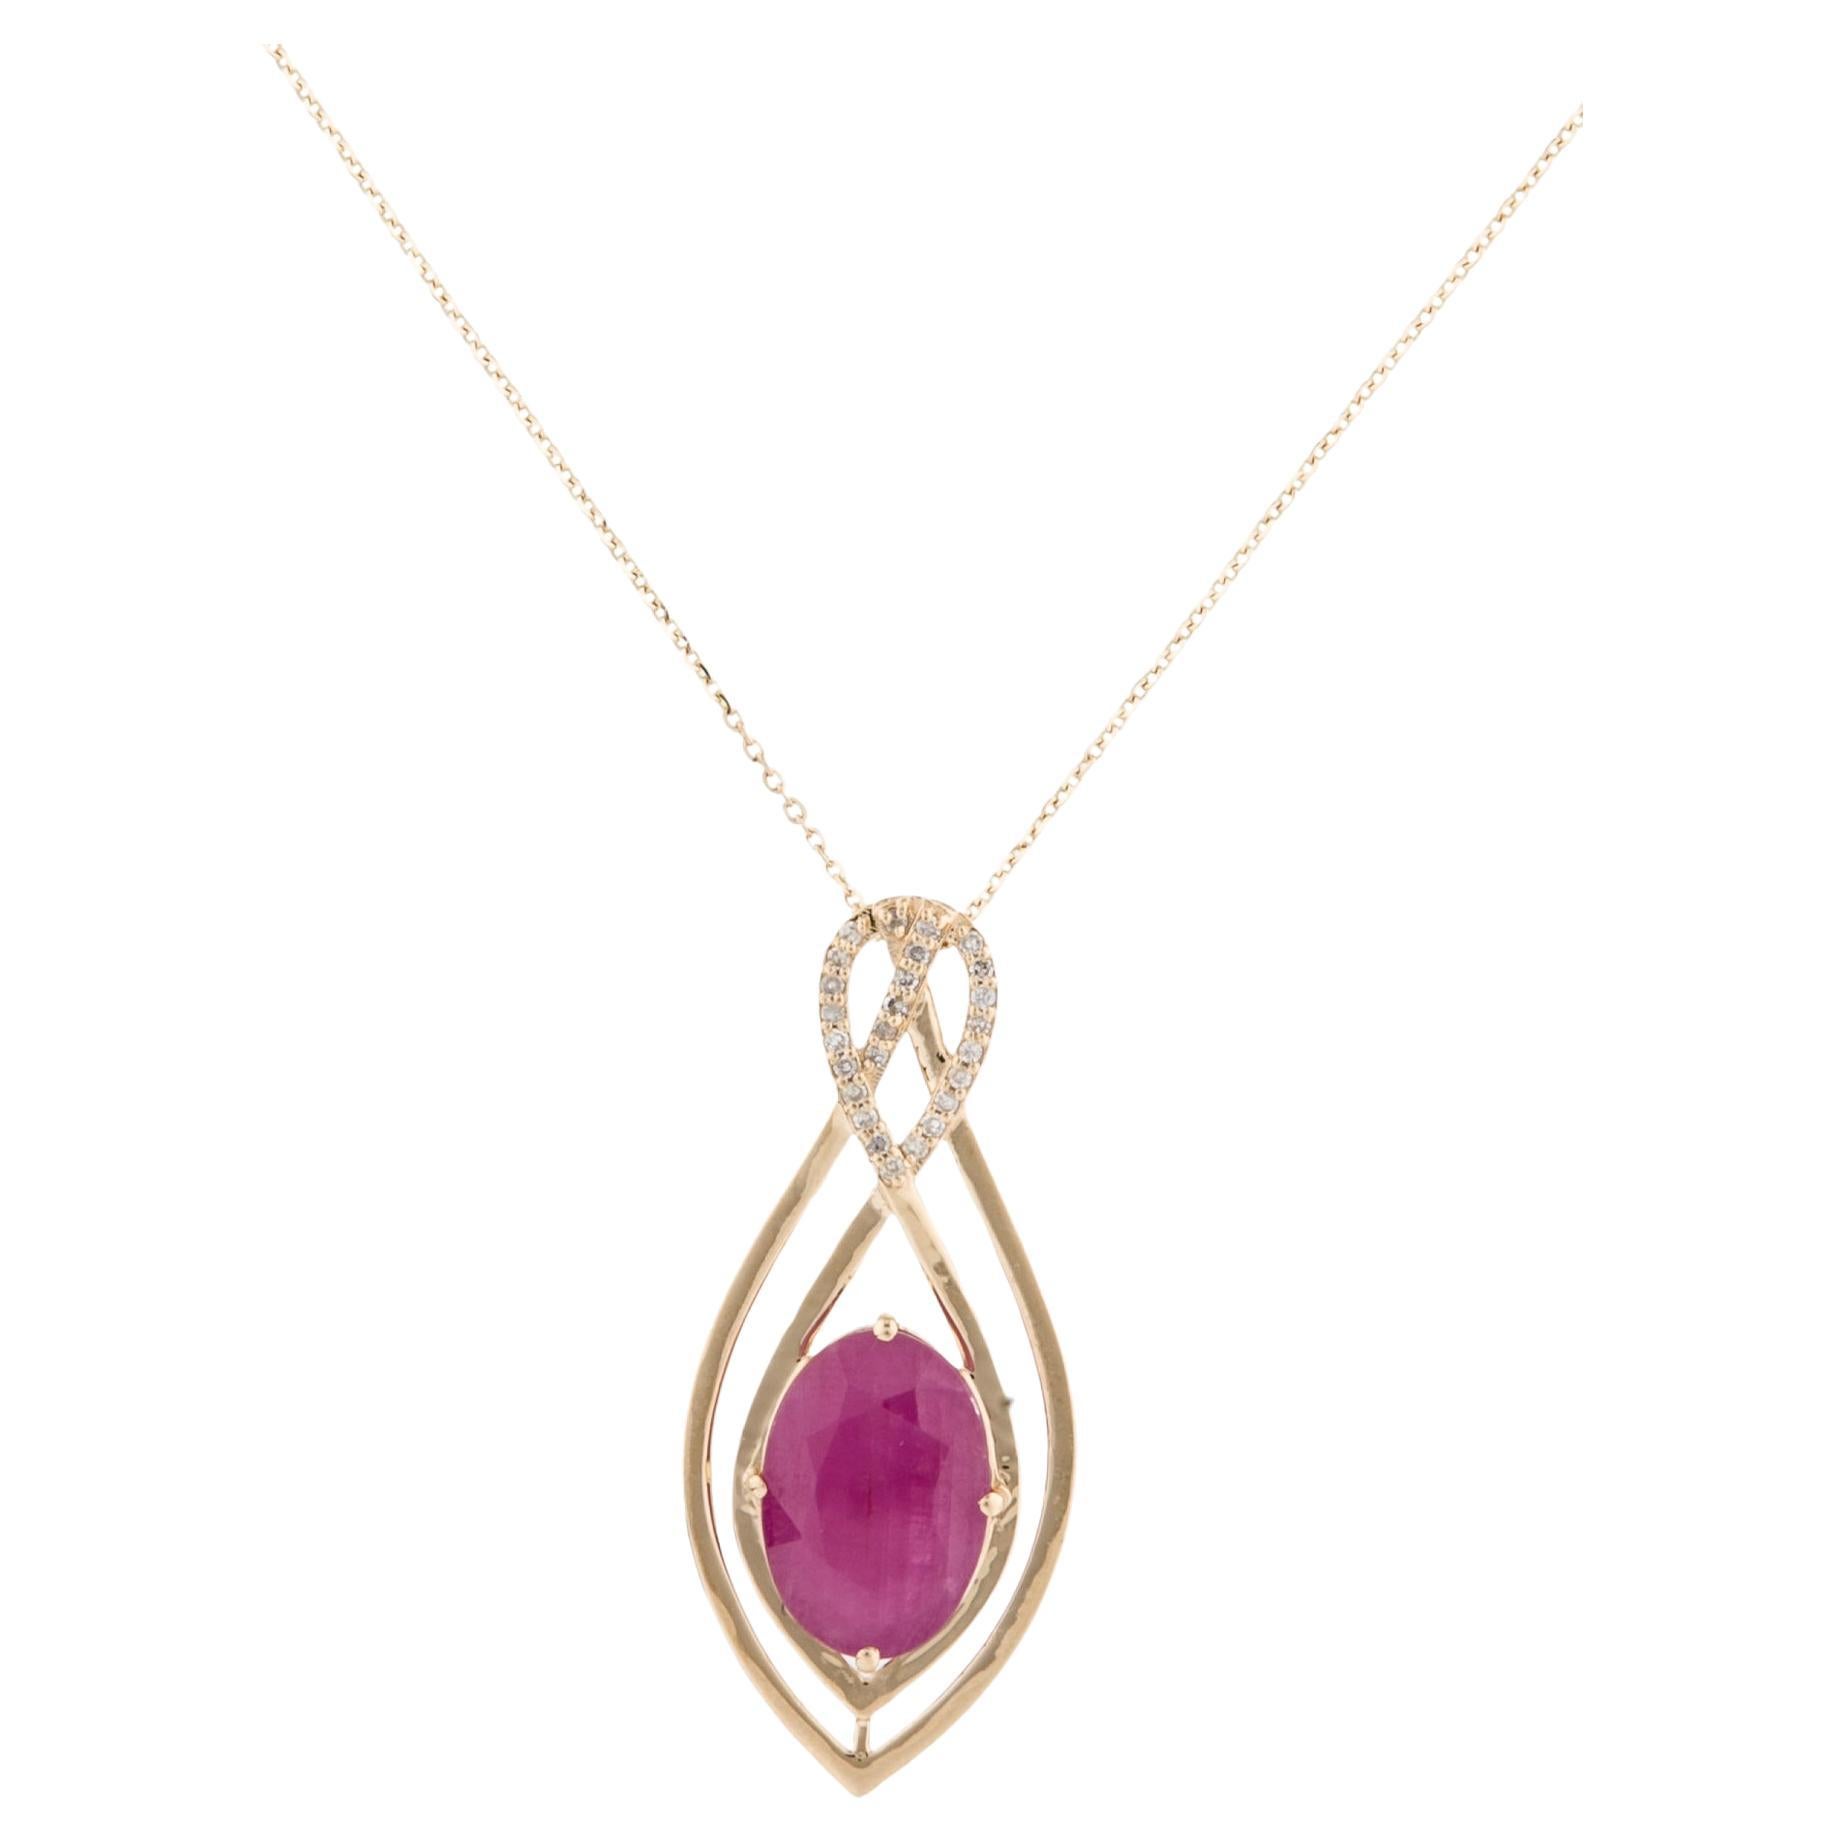 Exquisite 14K Ruby & Diamond Pendant Necklace  4.07ct Gemstone Sparkle For Sale